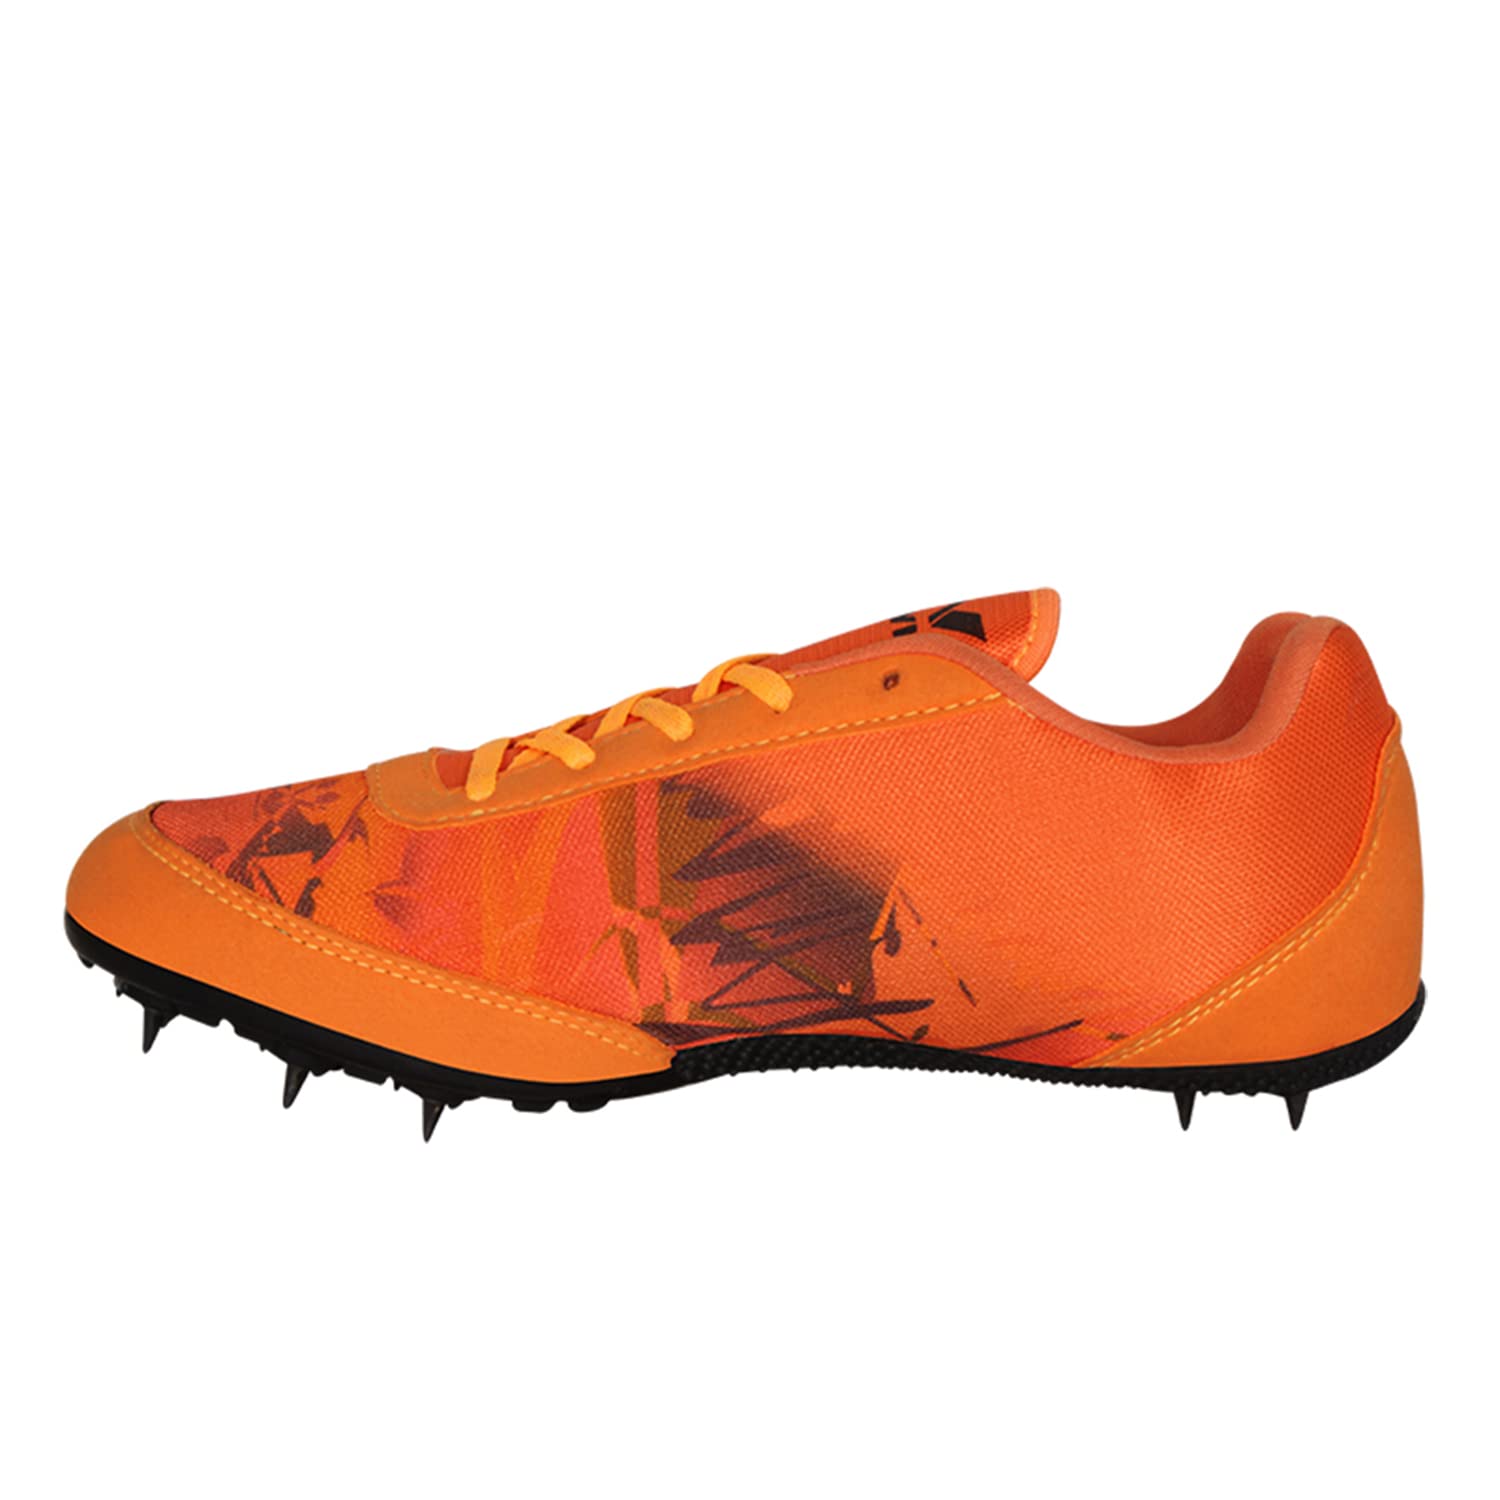 Nivia Zion Jumping - 1 Track & Field Shoe, Orange - Best Price online Prokicksports.com